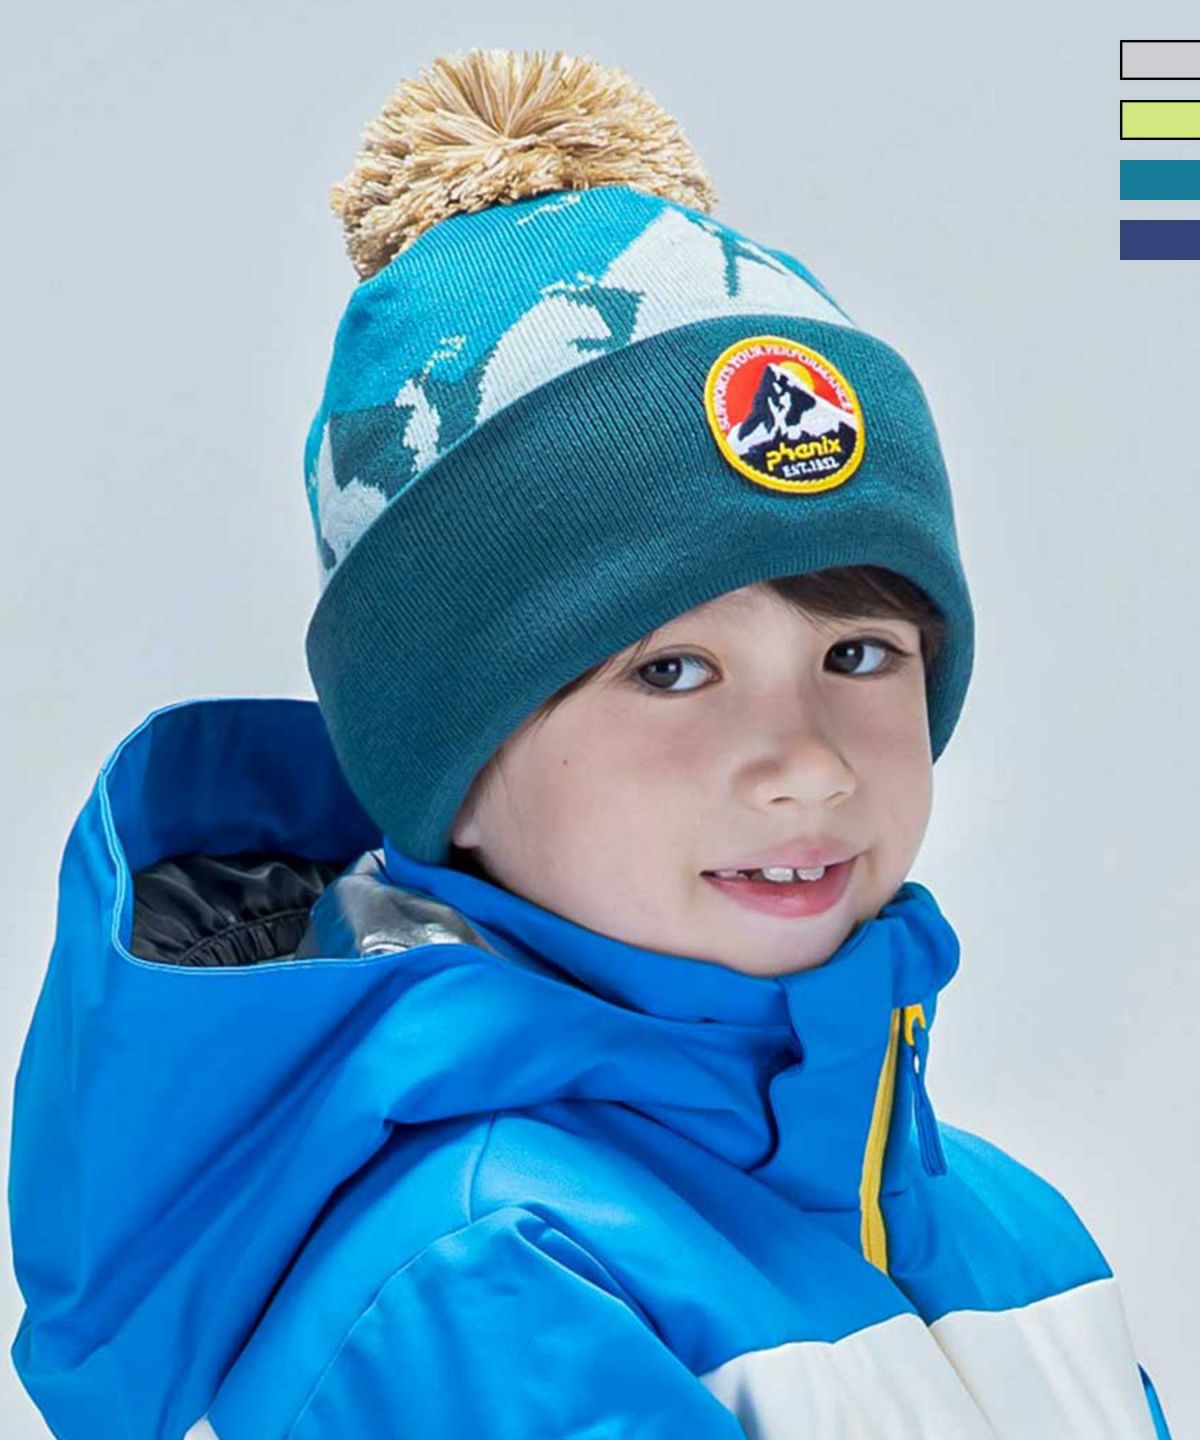 phenix(フェニックス)Snow Mountain Junior Knit Hat キッズ/スキー